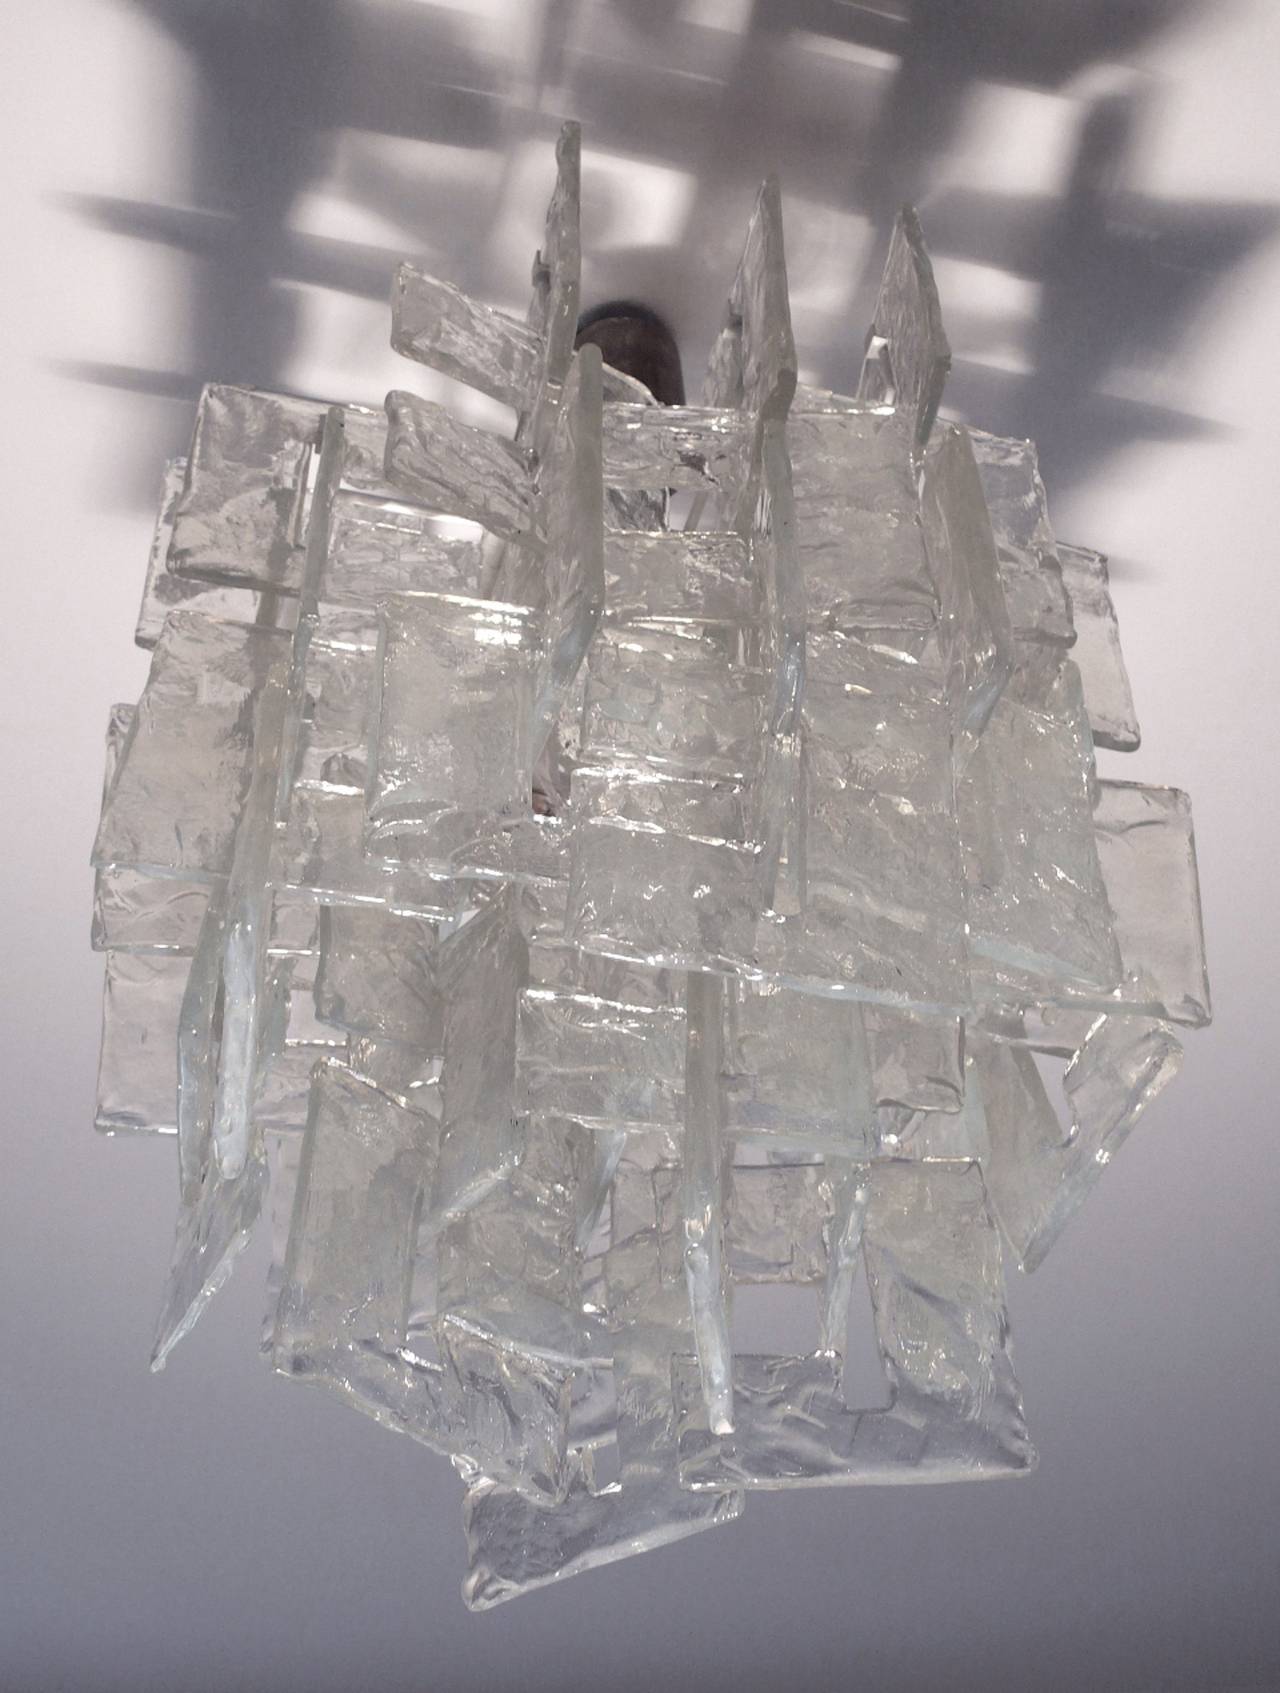 Pair of Chandelier by Carlo Nason for Mazzega (1970)
68 glass interlocking 